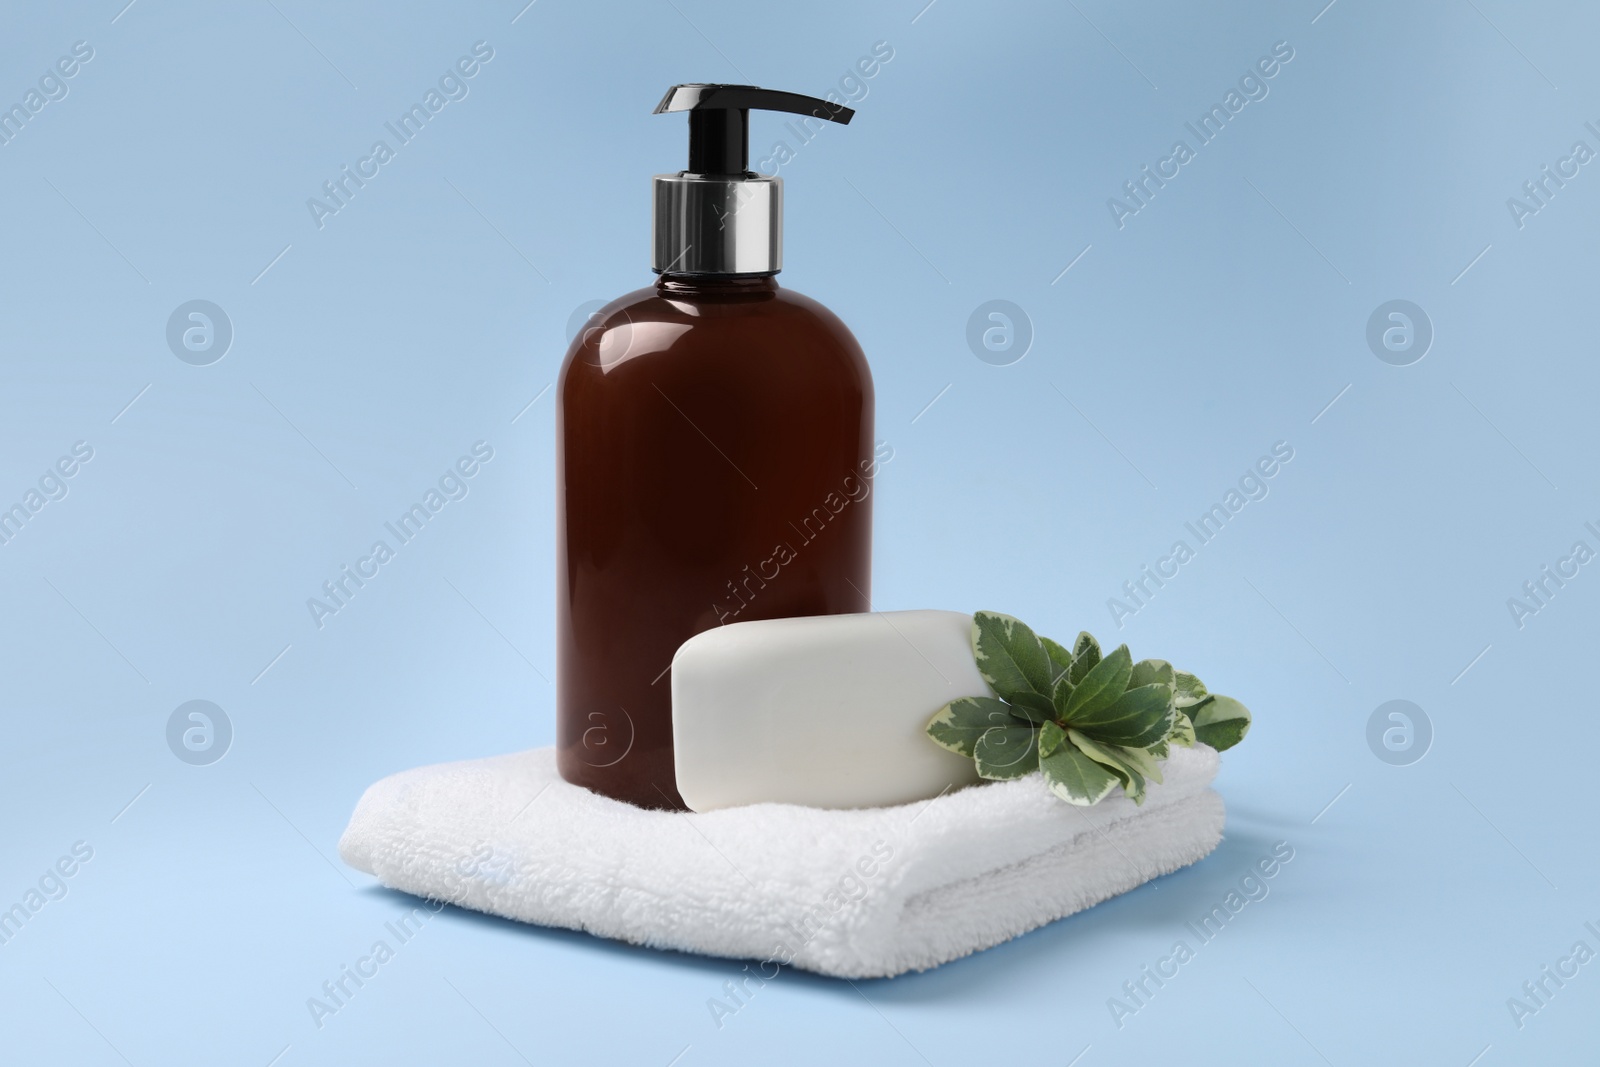 Photo of Soap bar, bottle dispenser and towel on light blue background